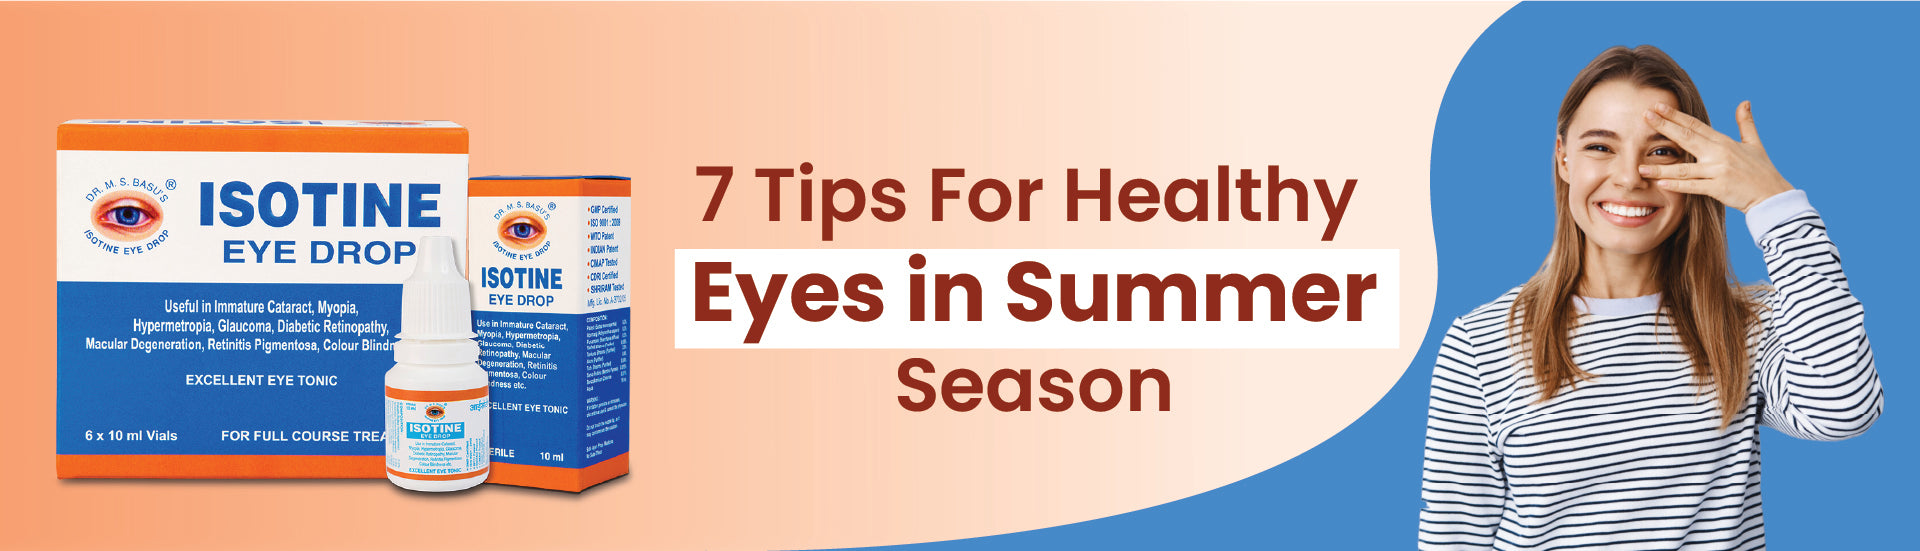 7 Tips For Healthy Eyes in Summer Season